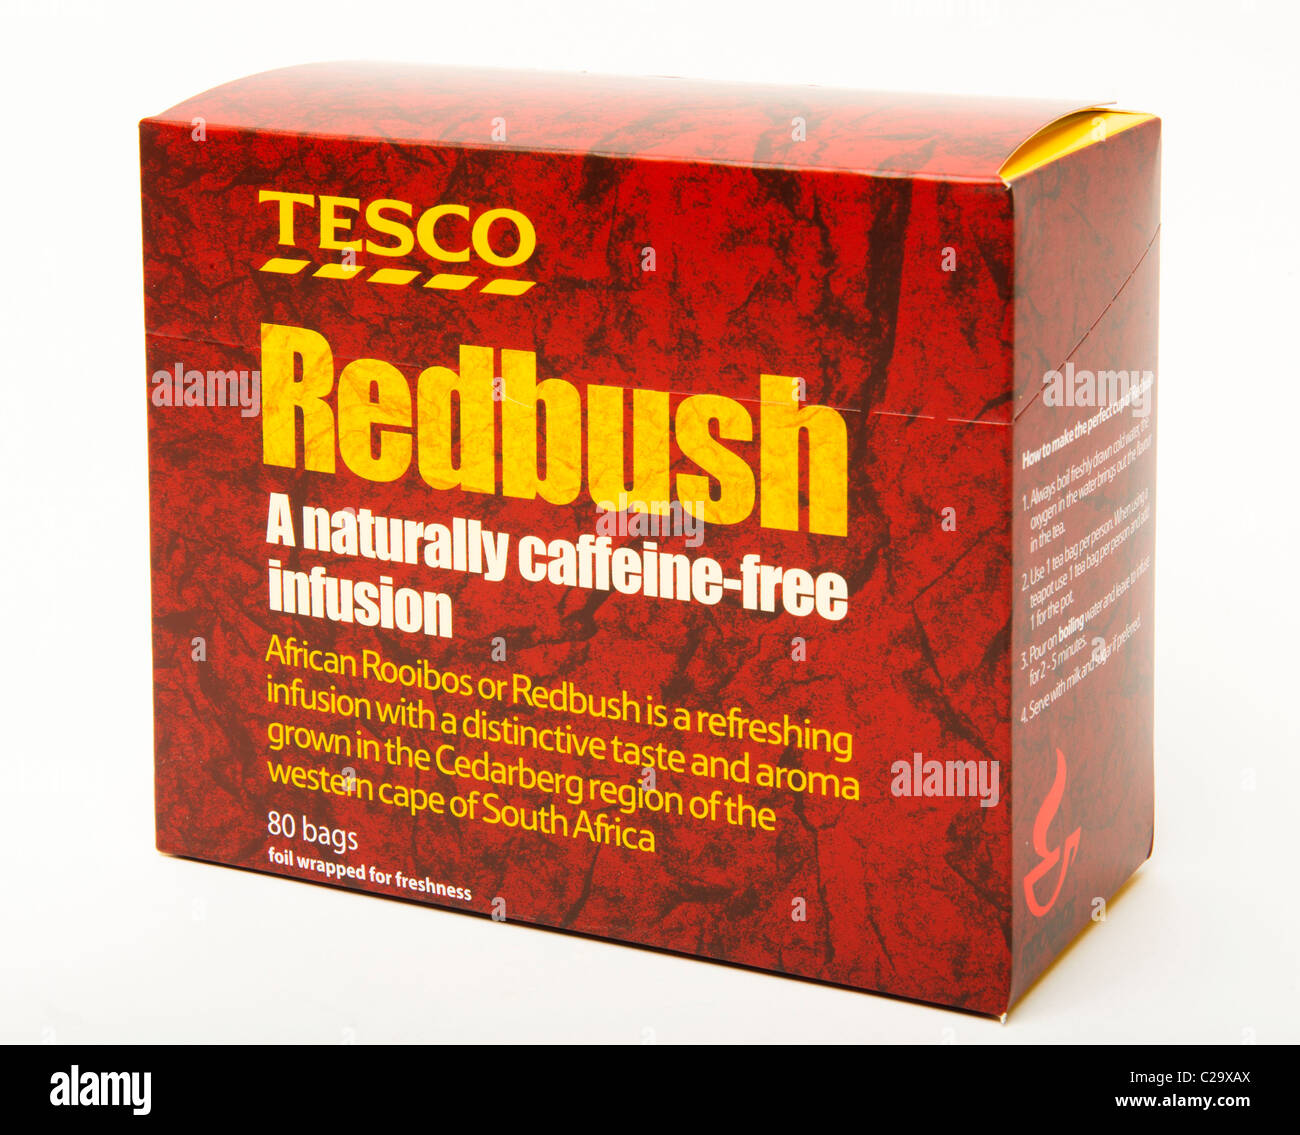 'Red Bush" tè "caffeina libera' alternativa rosso tè Bush Foto Stock